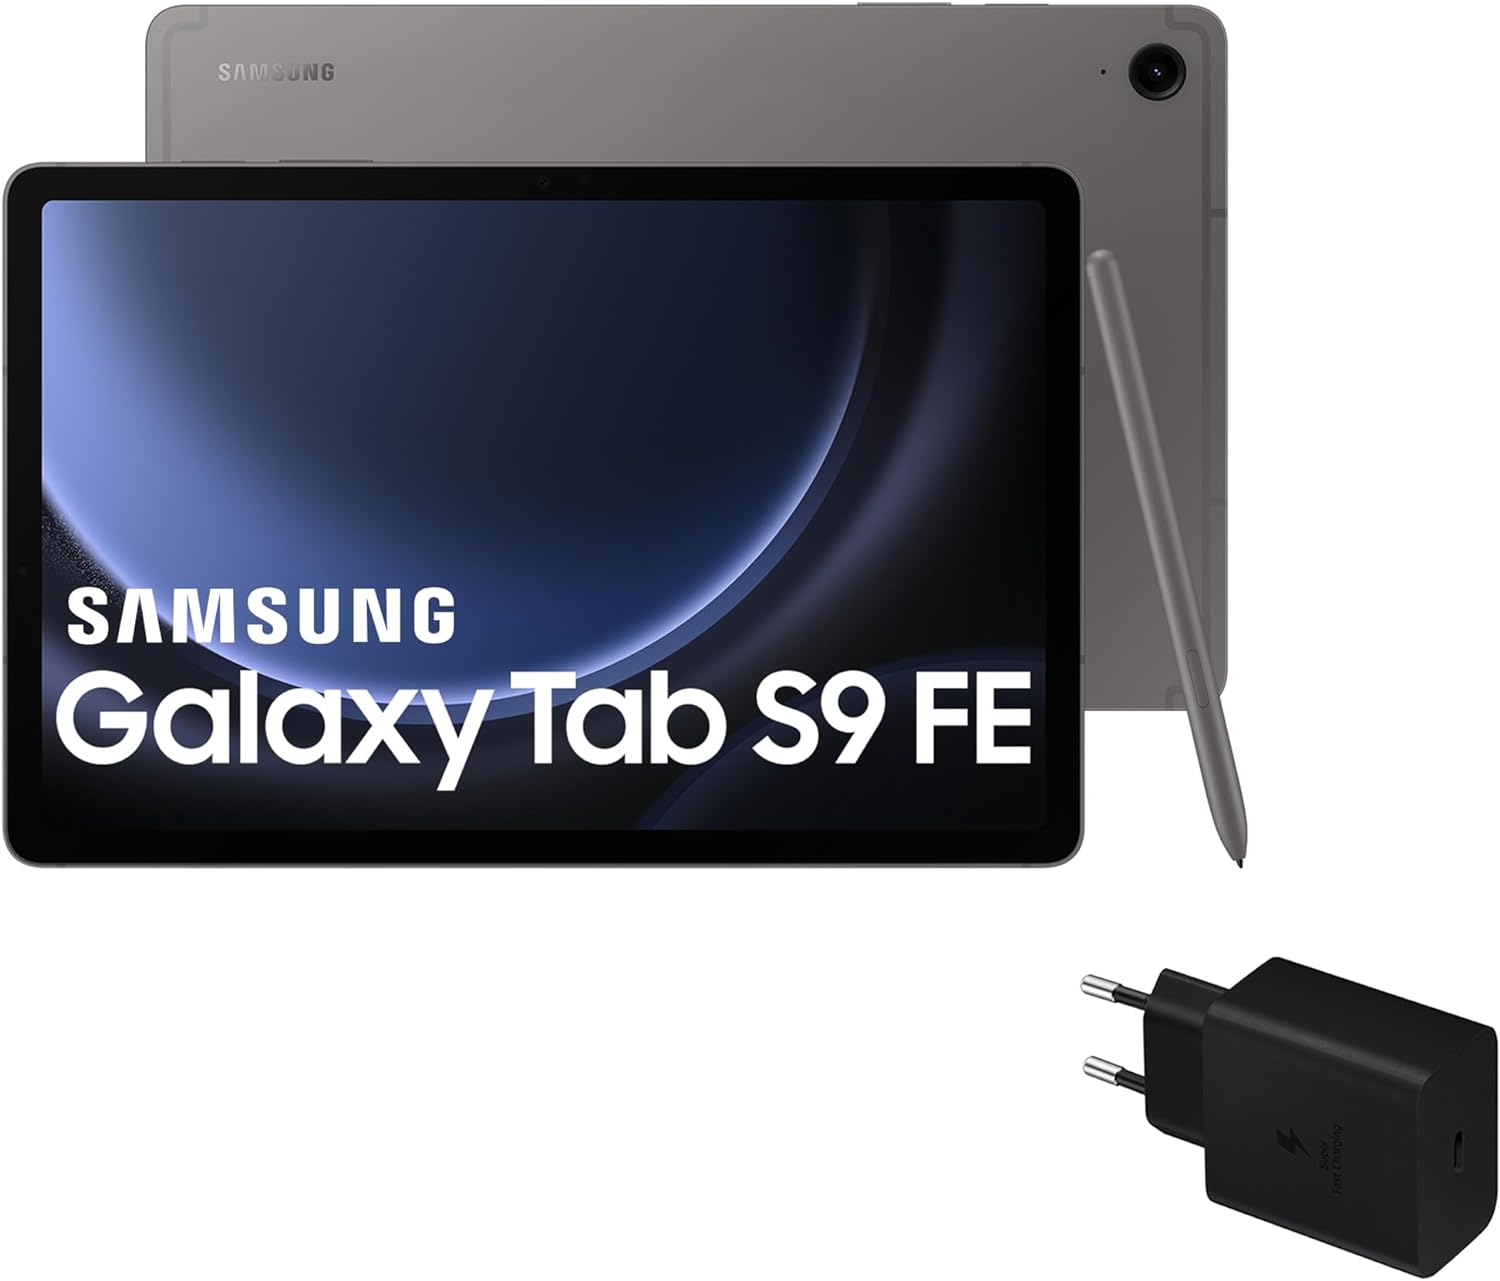 Samsung Galaxy Tab S9 FE vs Samsung Galaxy Tab S9 FE Plus